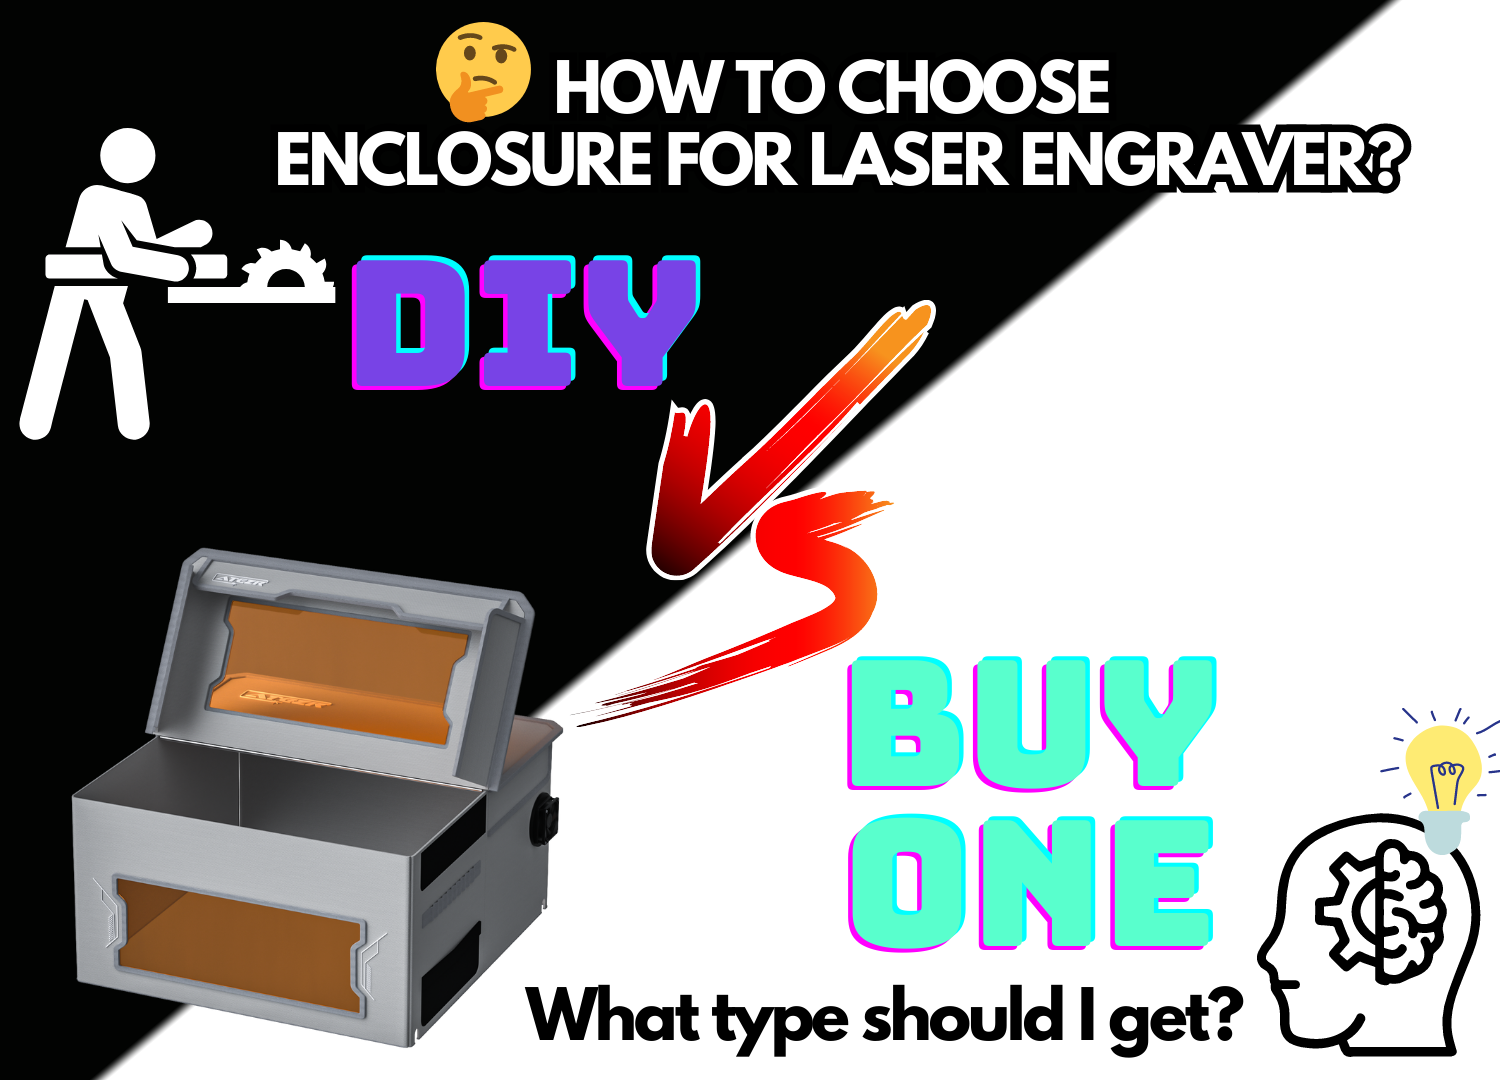 Laser Engraver Enclosure Pro